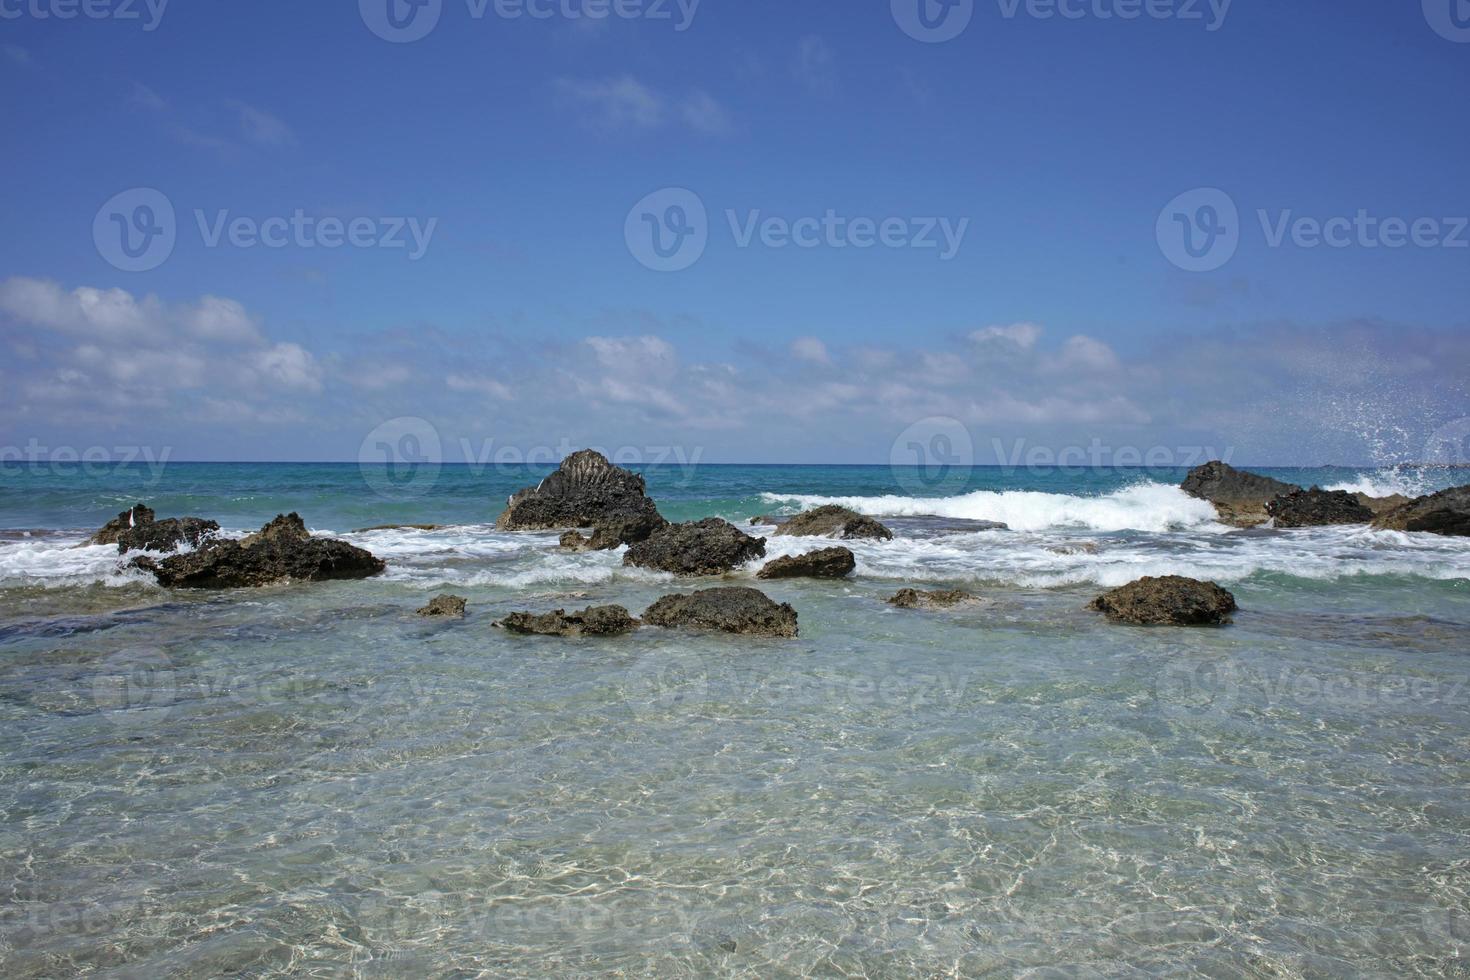 falassarna beach blå lagun Kreta ö sommaren 2020 covid19 semester foto